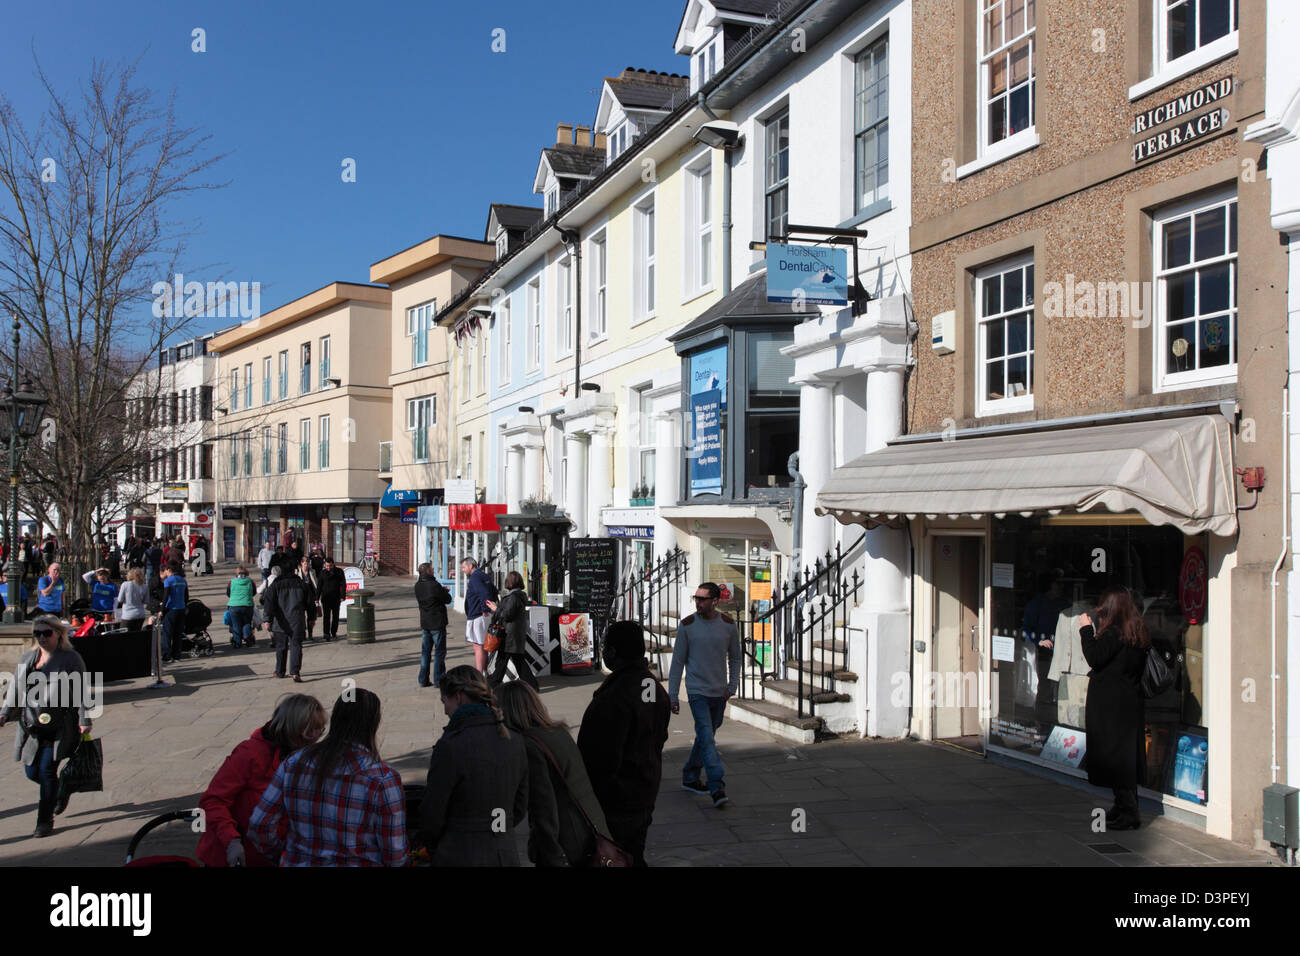 South Street pedestrianised area, Horsham, West Sussex Stock Photo